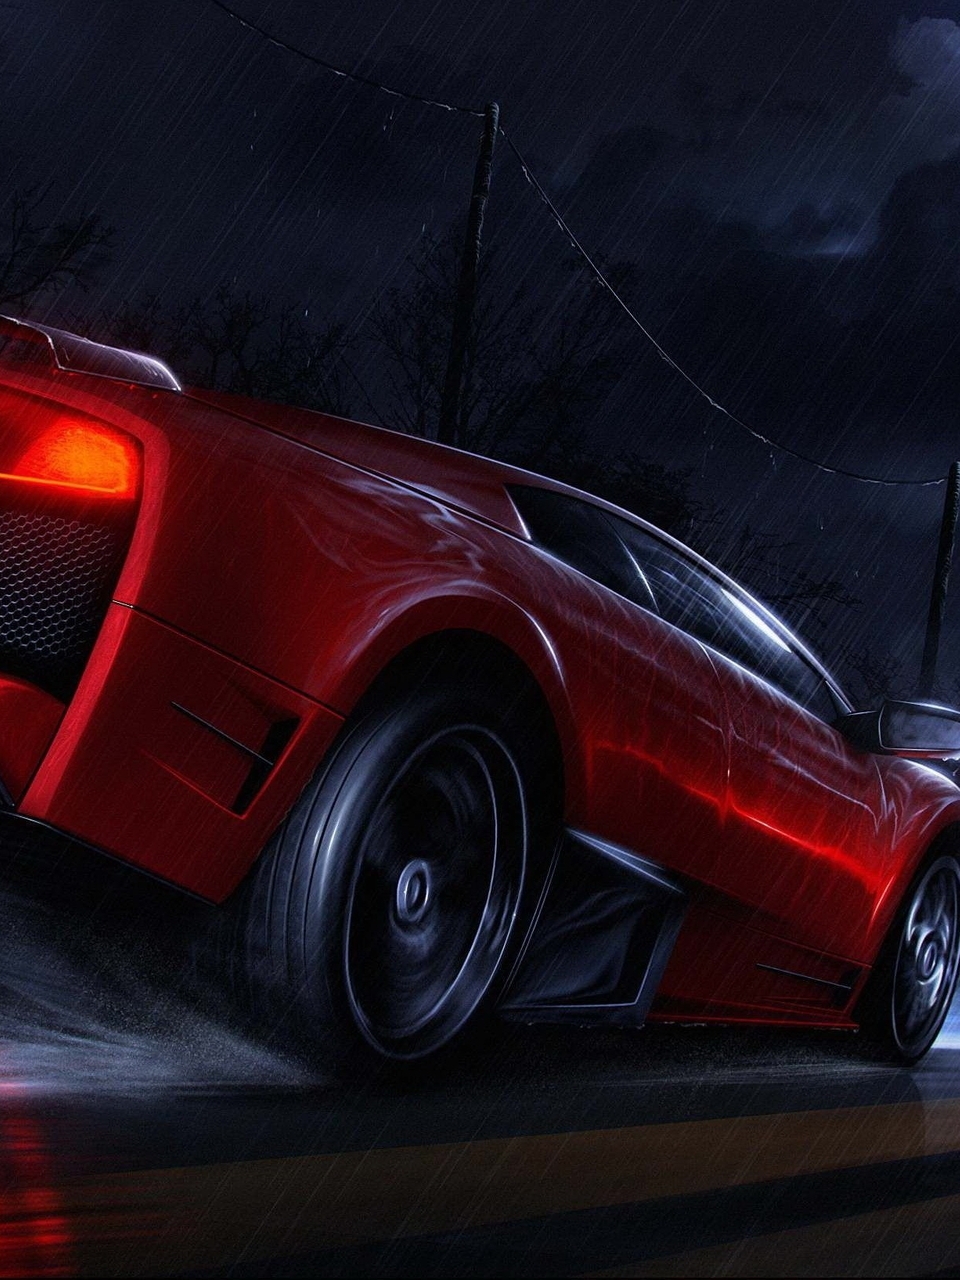 Image: Supercar, red, Lamborghini, road, moon, night, rain, speed, splashes